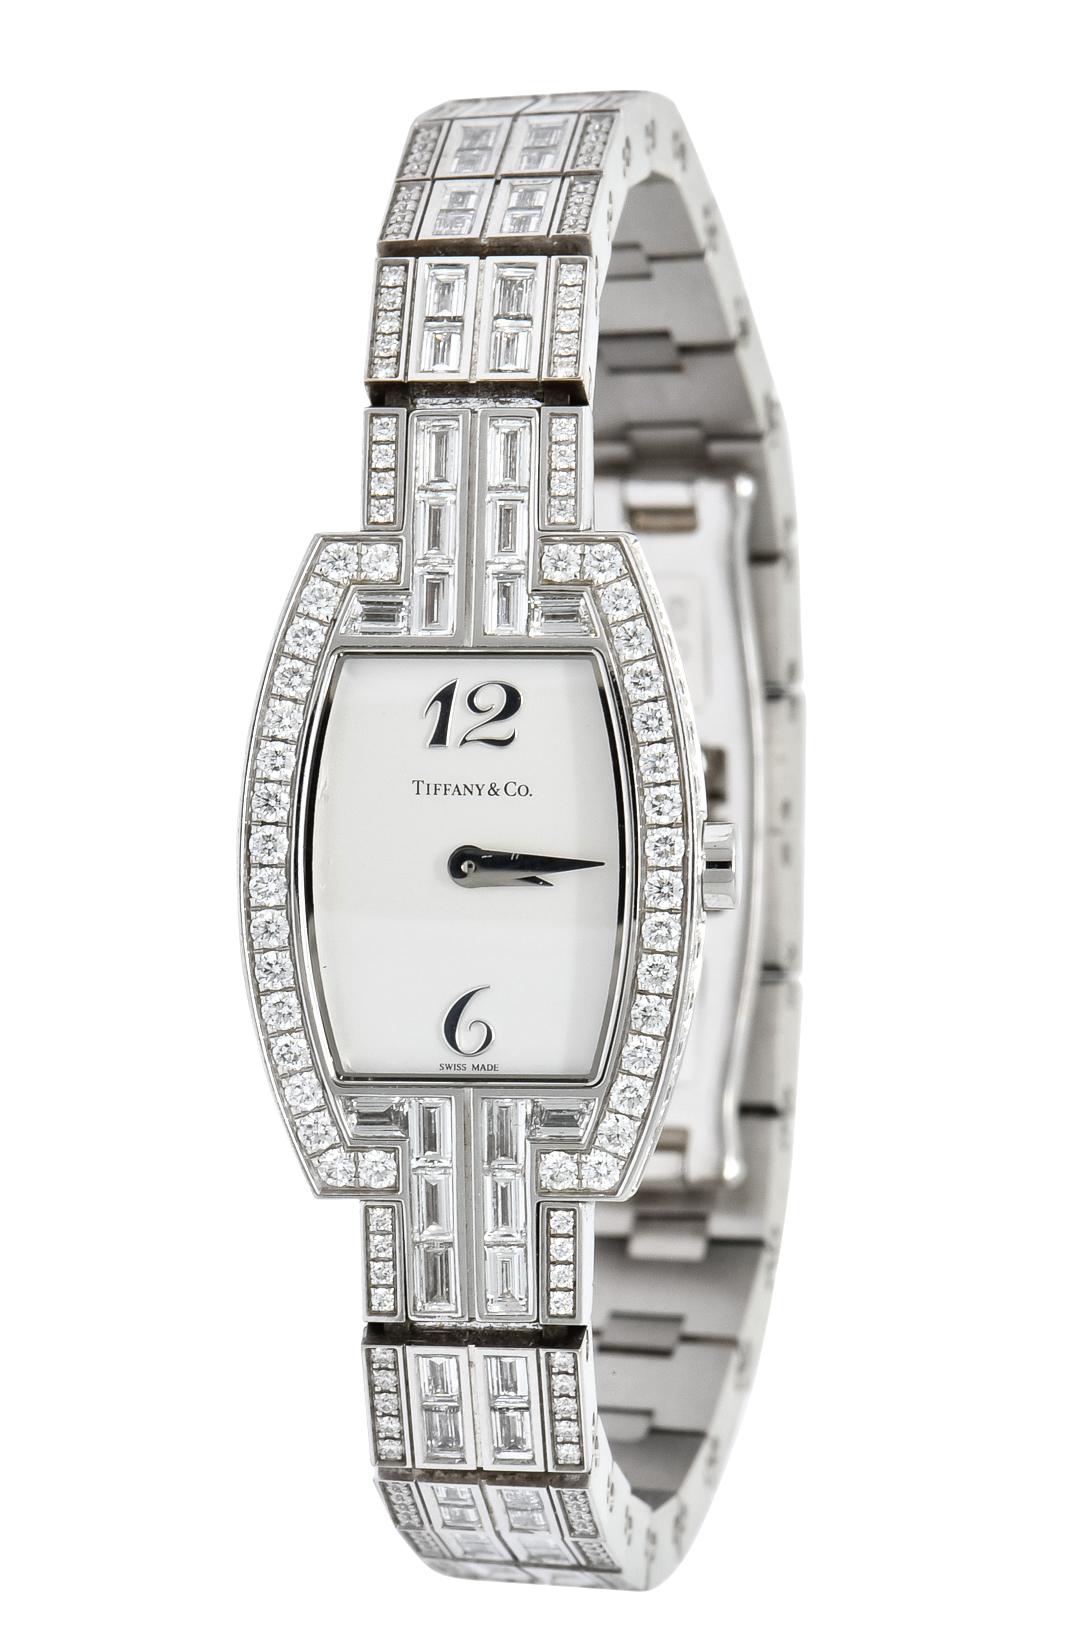 Contemporary Tiffany & Co. 8.20 Carat Diamond 18 Karat White Gold Tonneau Ladies Watch